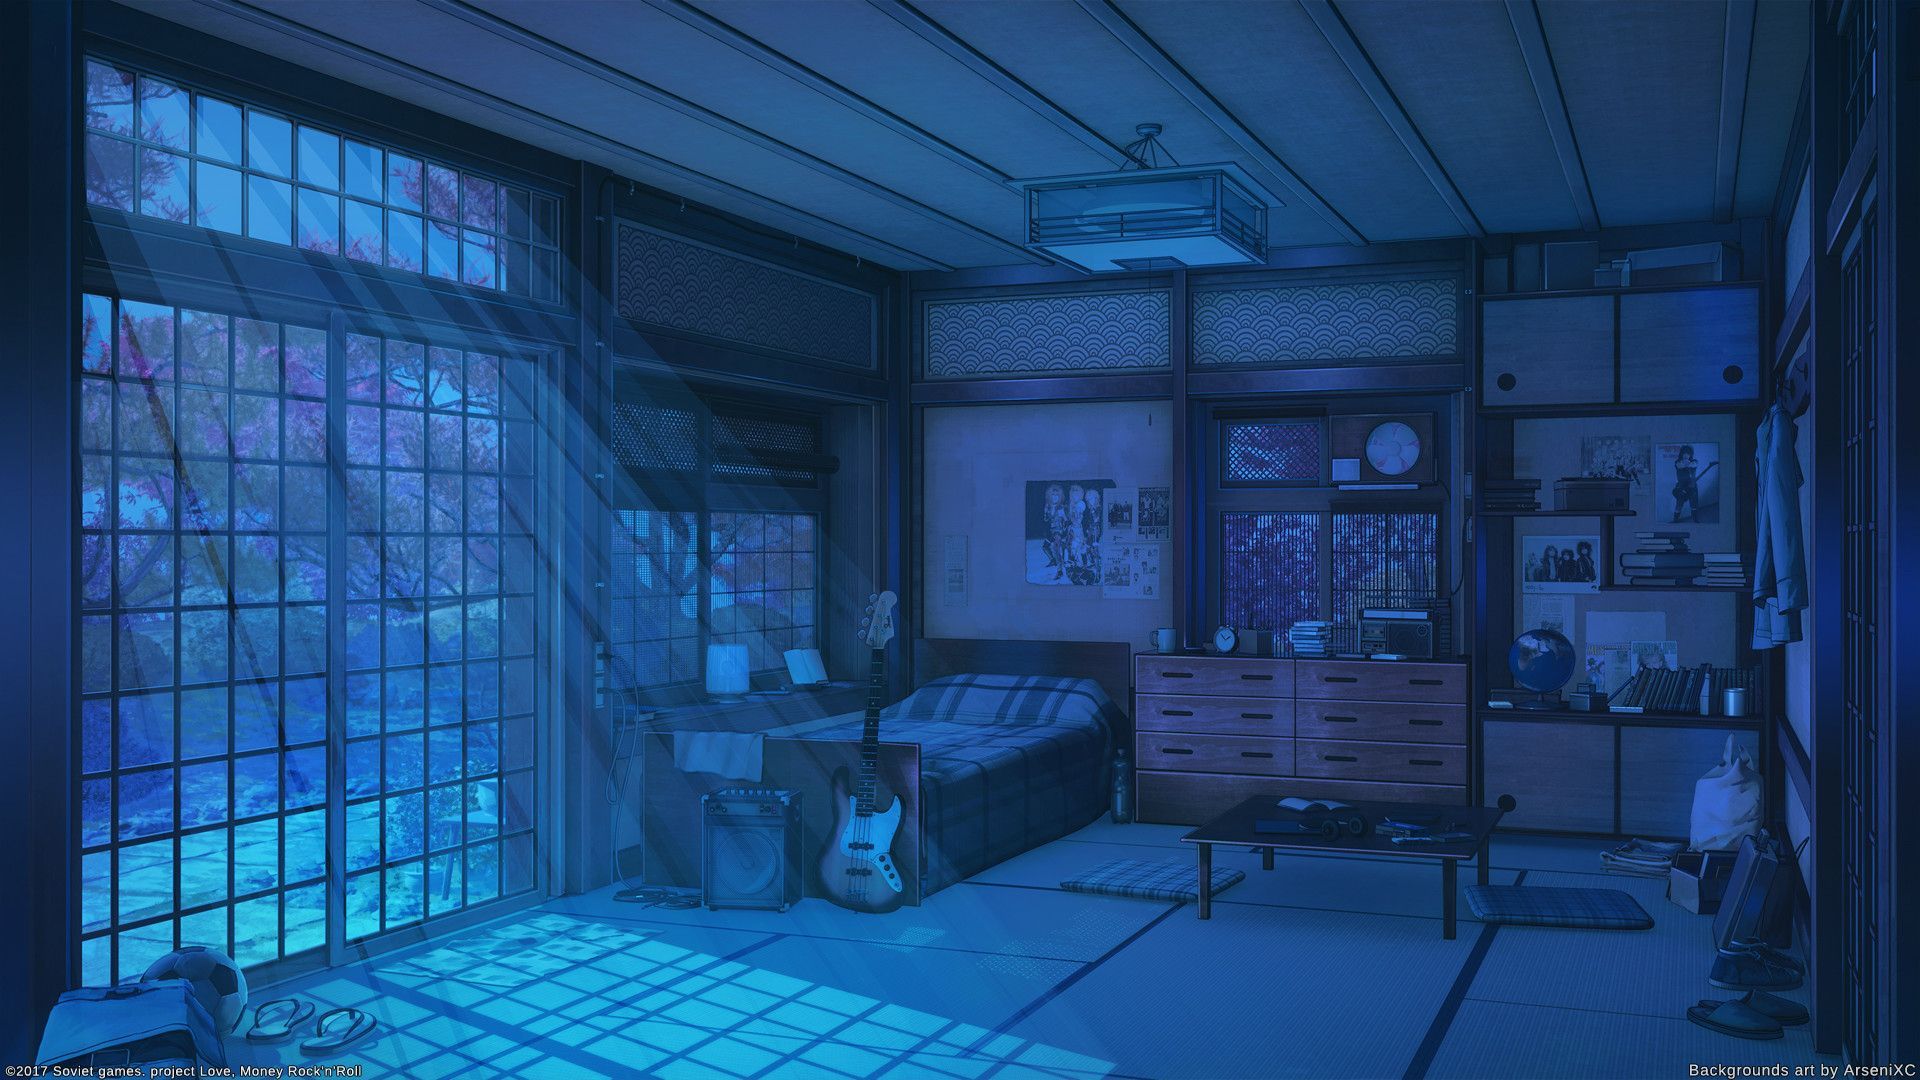 Anime aesthetic room wallpaper - 67 photo